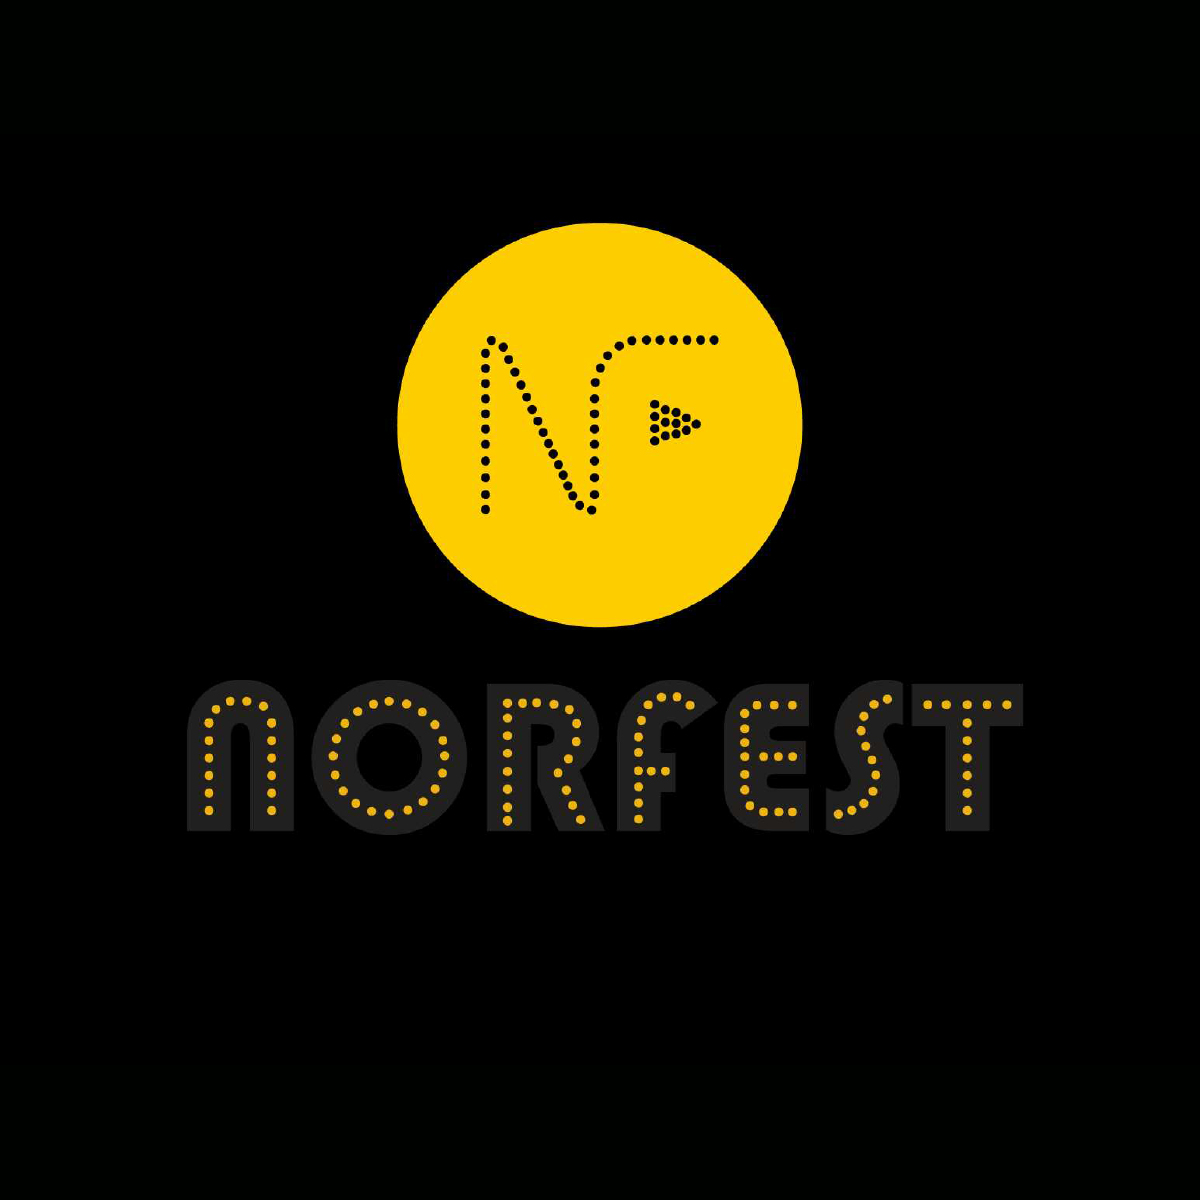 Norfest, Next Galleria